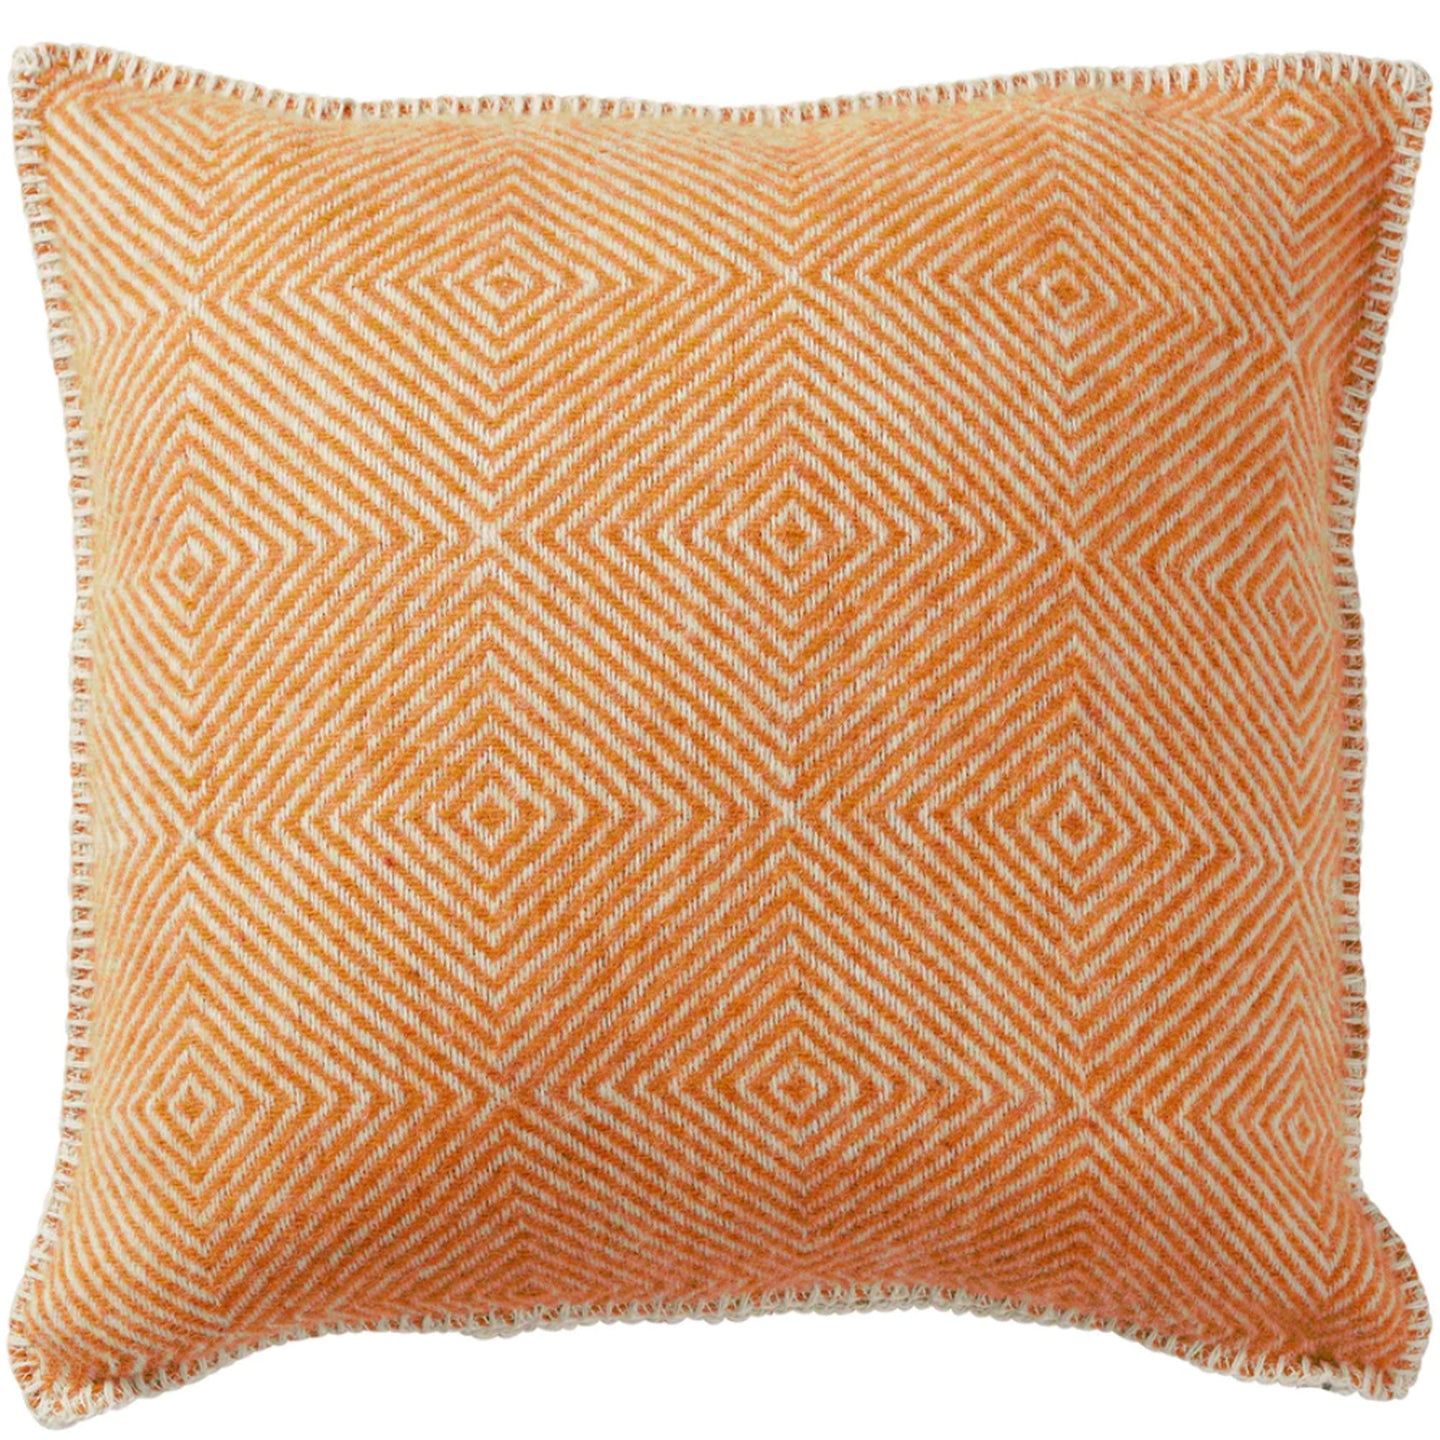 Gooseye Orange Cushion Cover 45x45cm